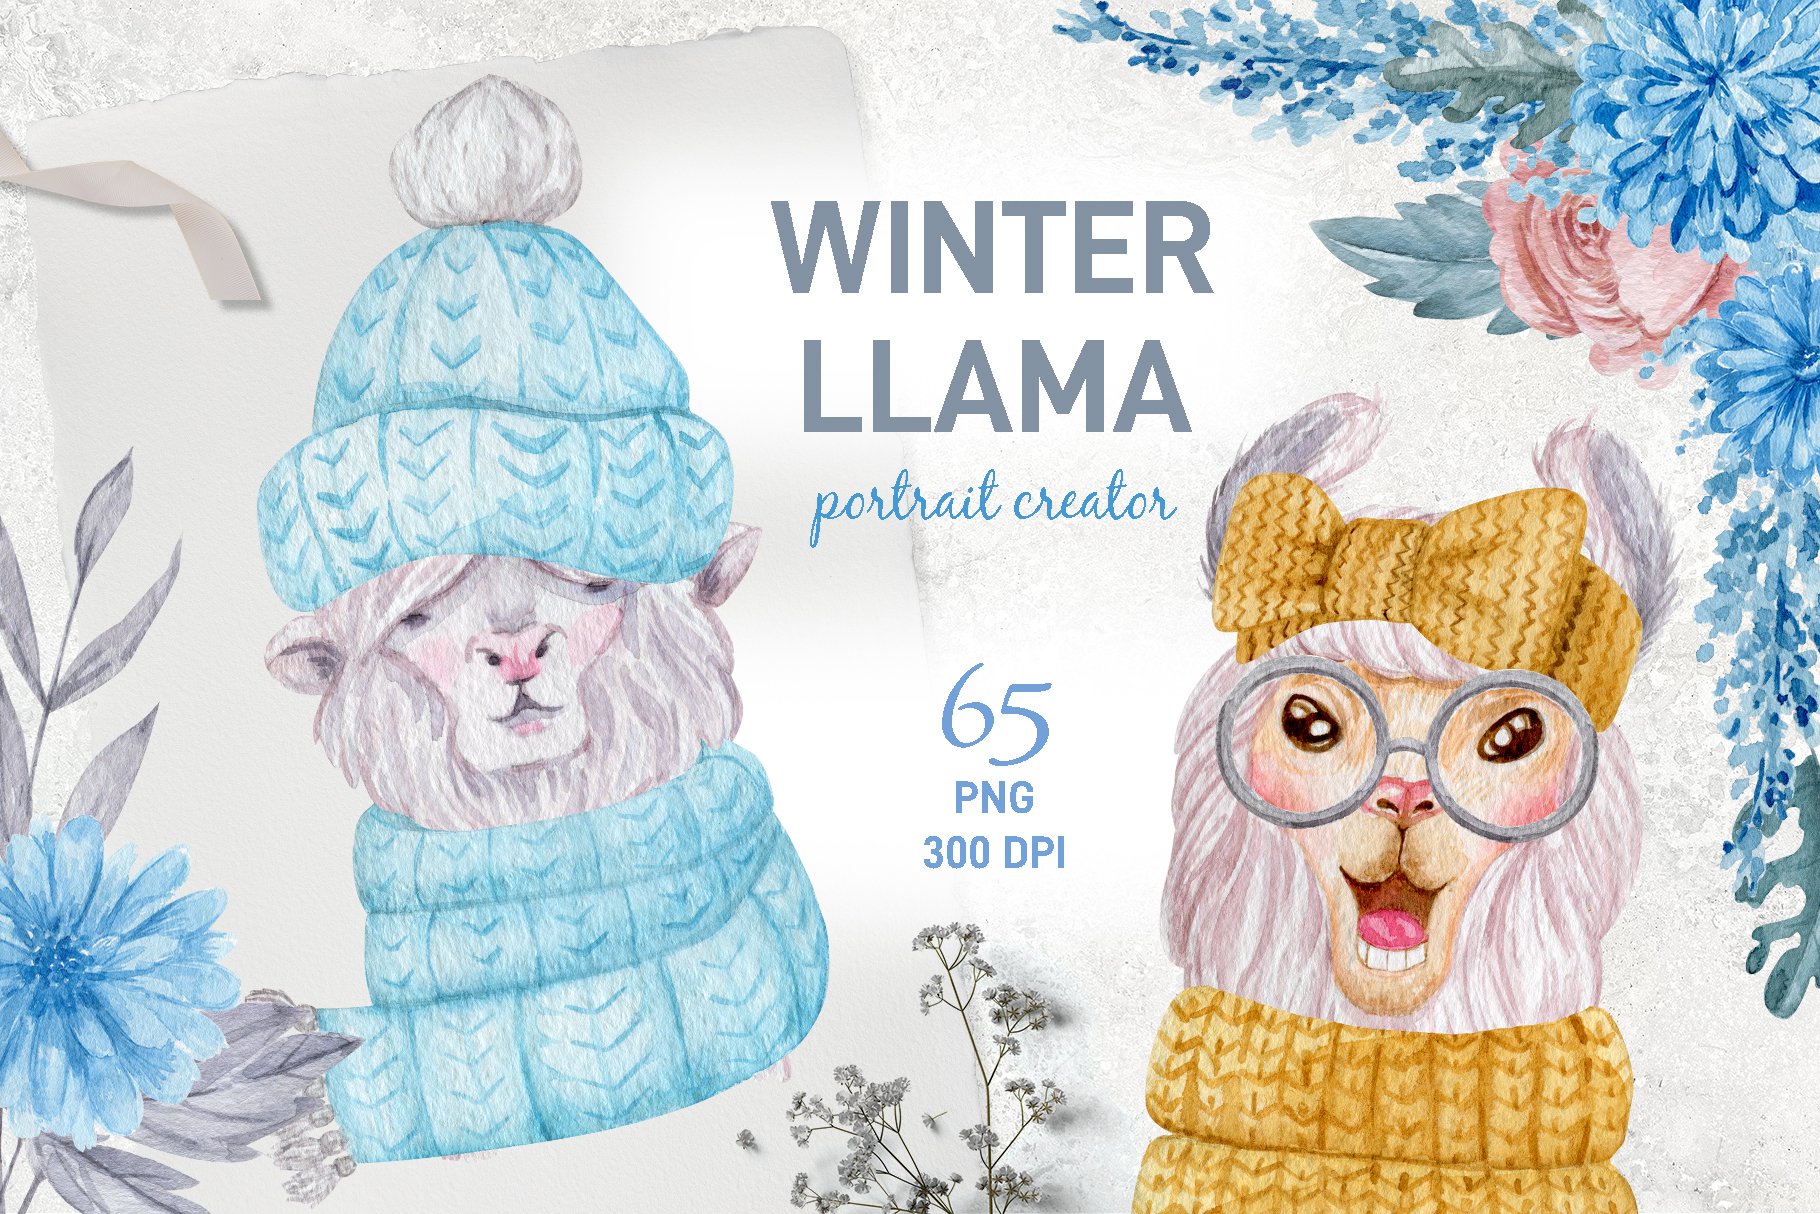 Llama Portrait Creator cover image.